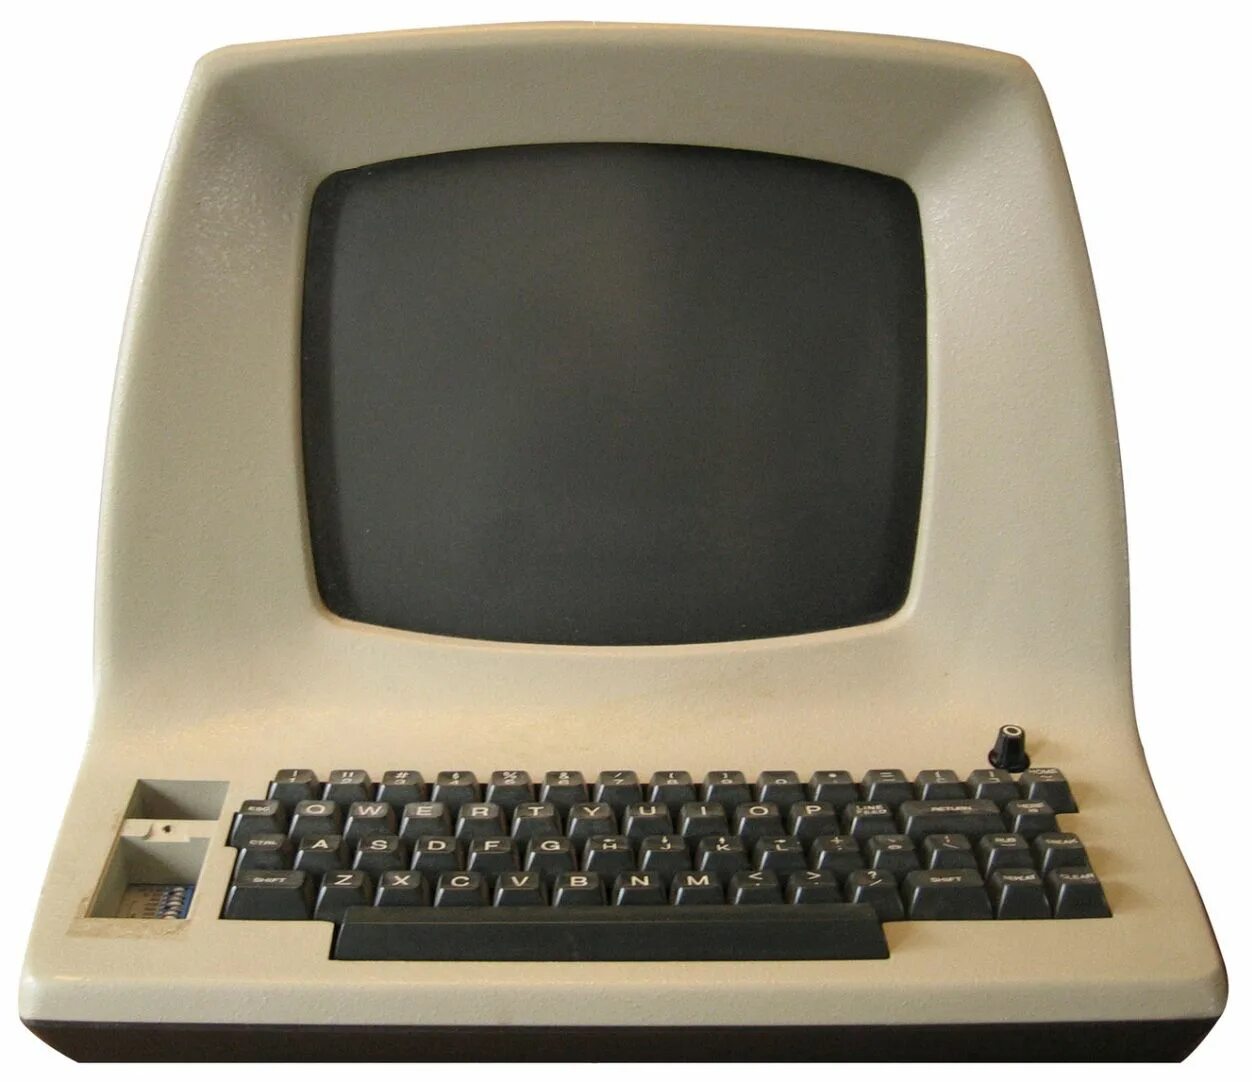 Sibm mouse. Старый компьютер. Монитор старого компьютера. Старинный компьютер. Самый старый компьютер.